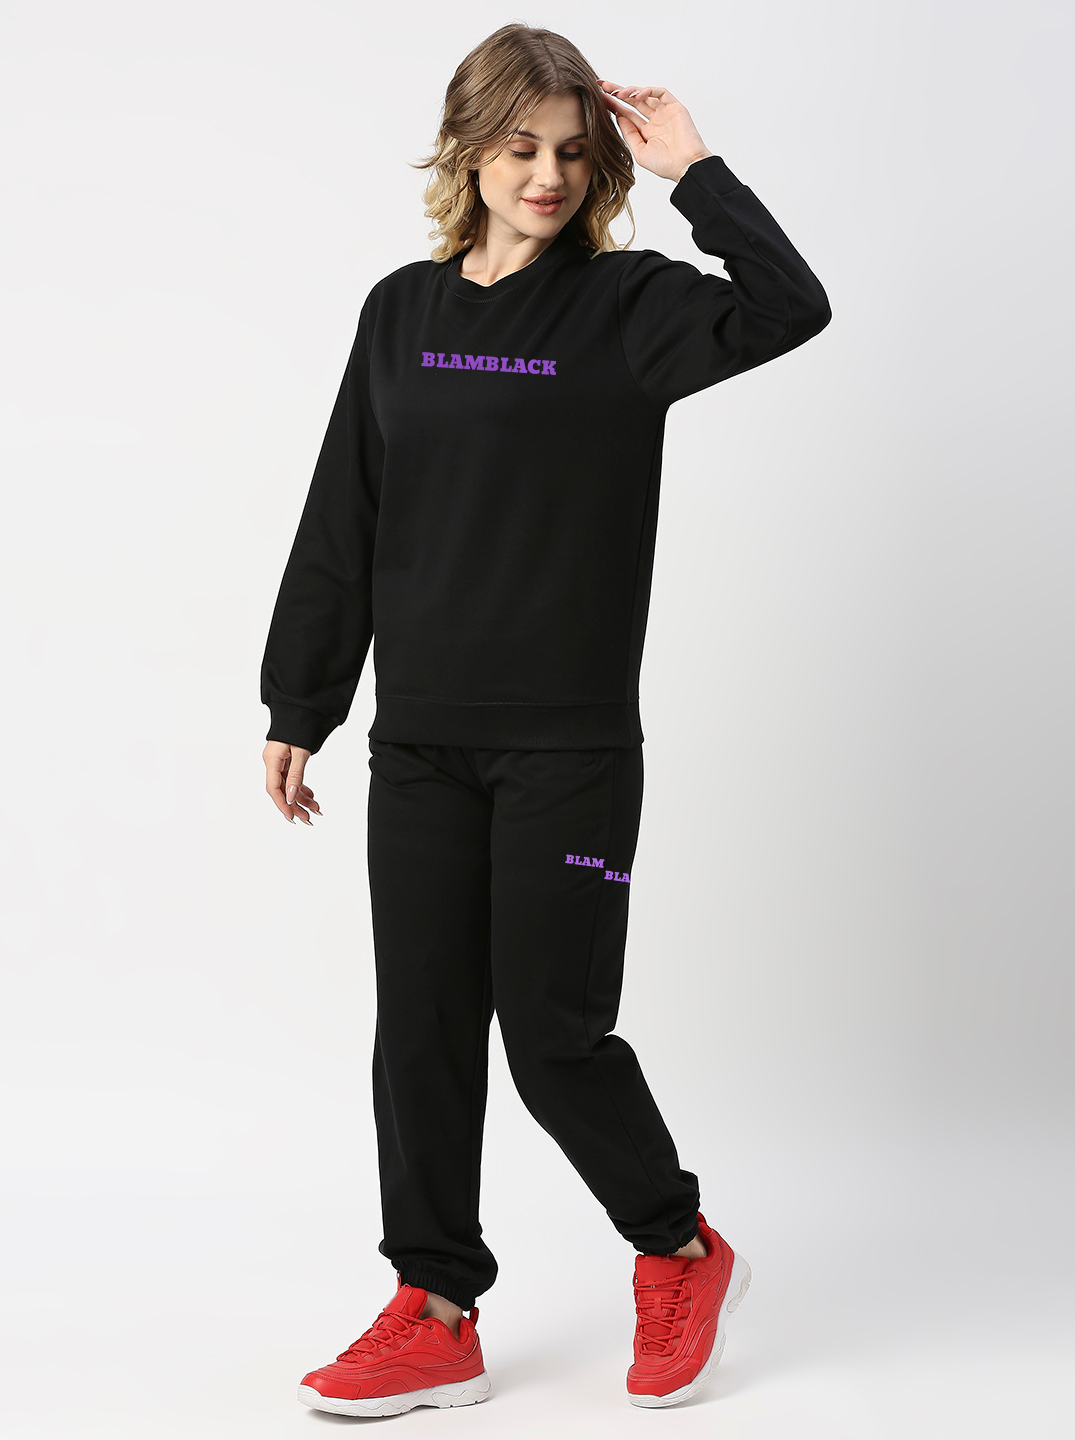 Buy Blamblack Black Sweatshirt and Joggers Co-ord Set